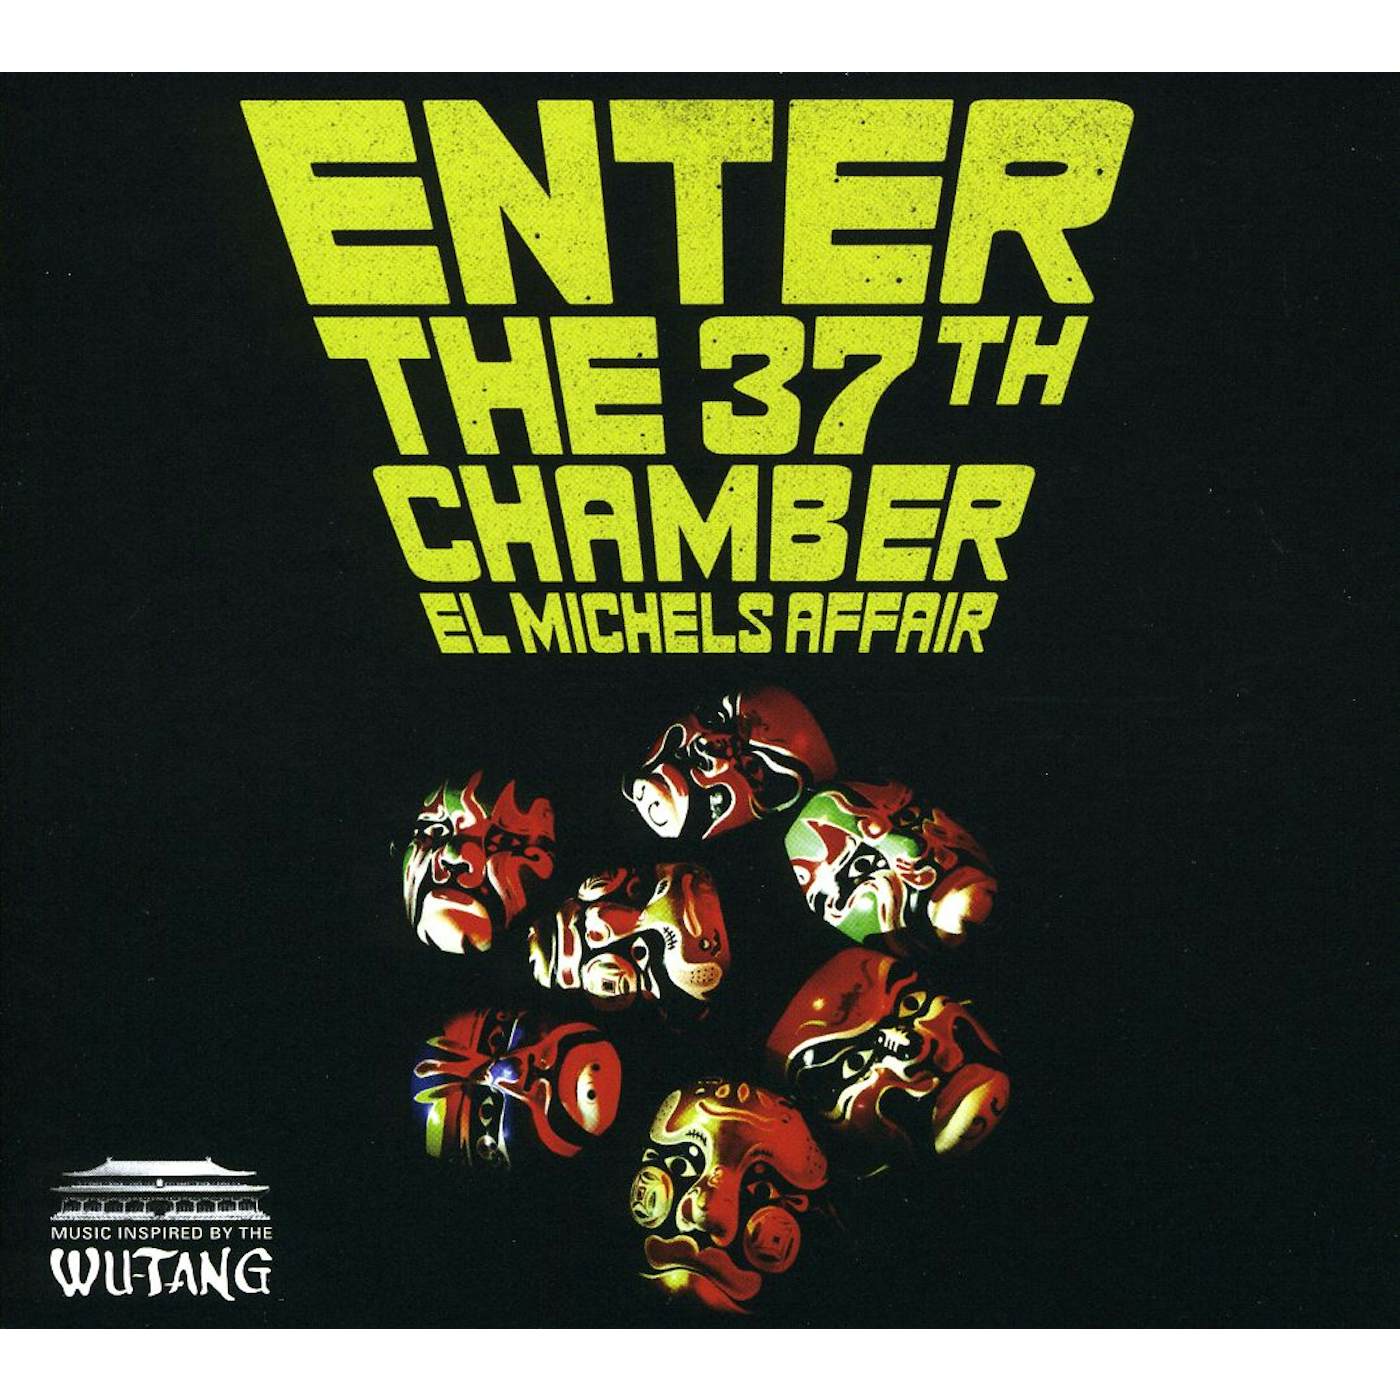 El Michels Affair ENTER THE 37TH CHAMBER CD